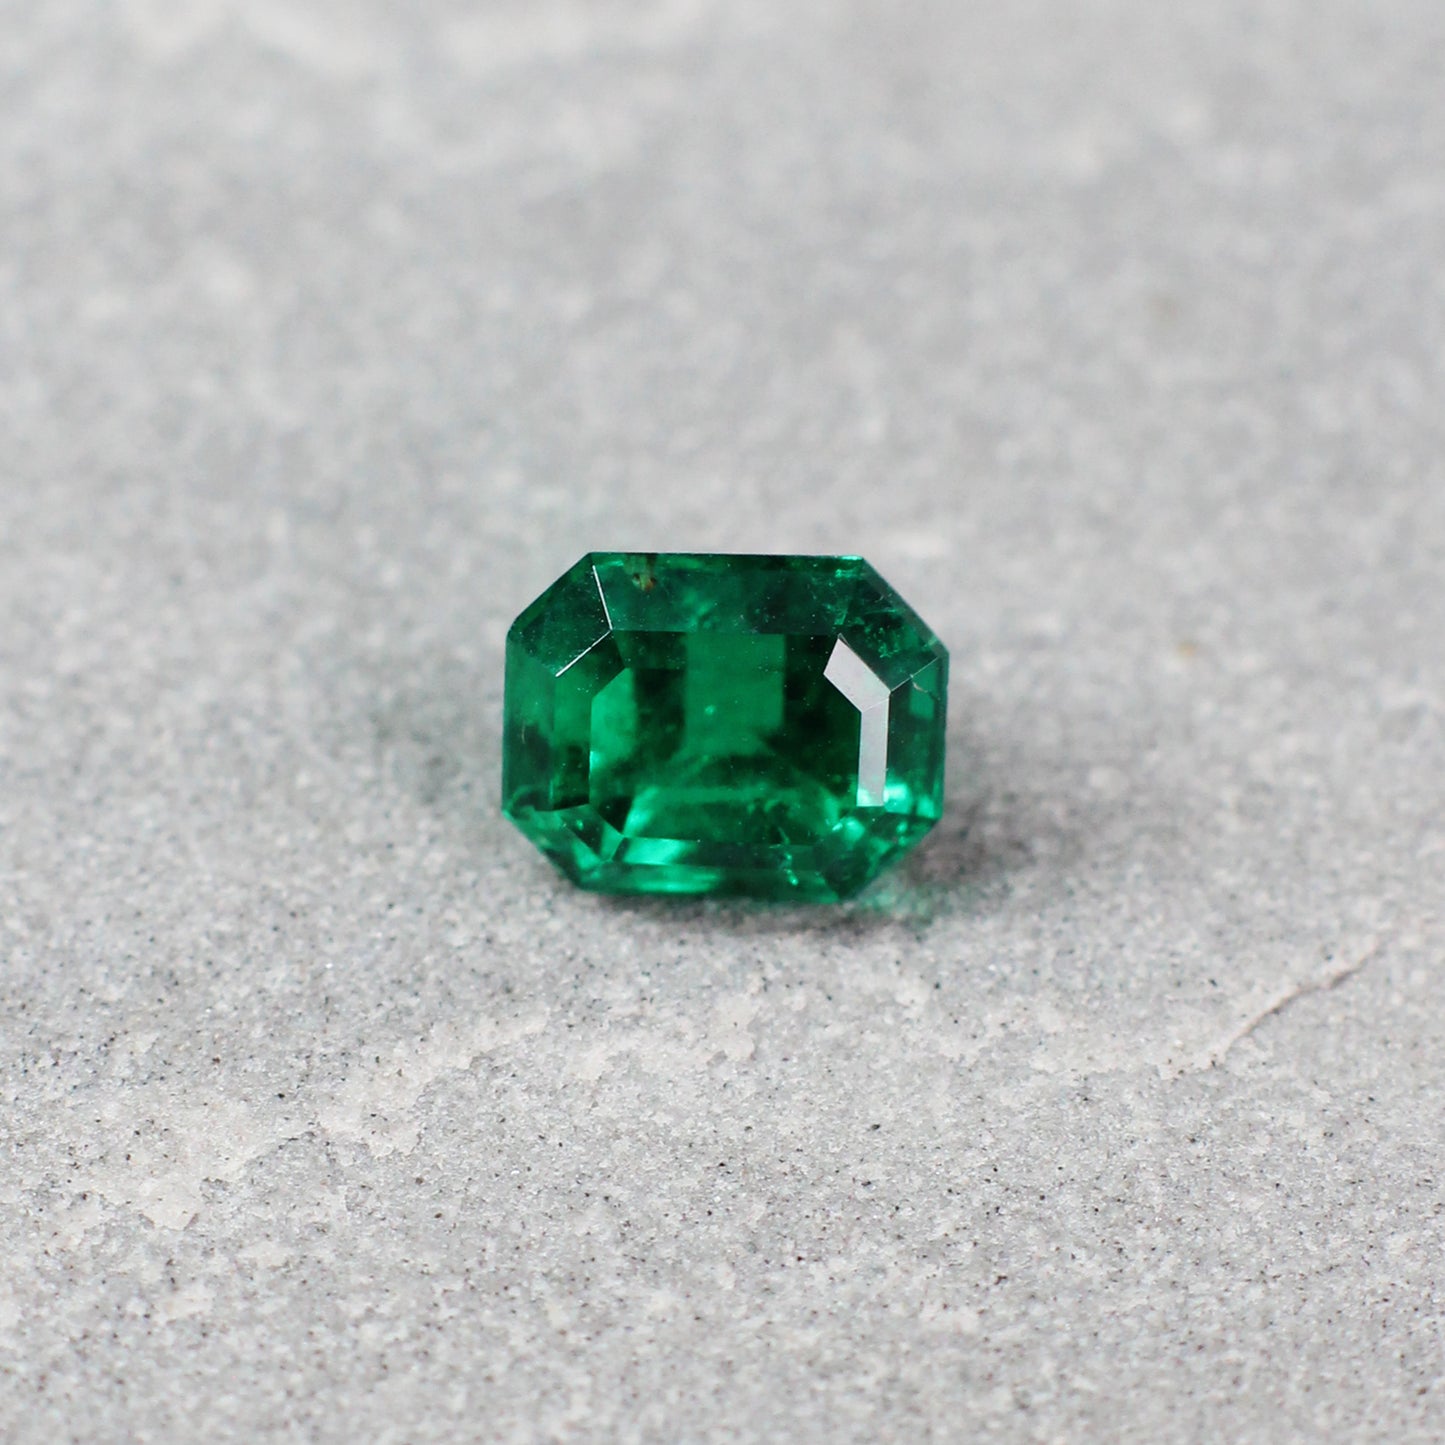 1.53ct Octagon Emerald, Minor Oil, Colombia - 7.32 x 6.03 x 5.30mm